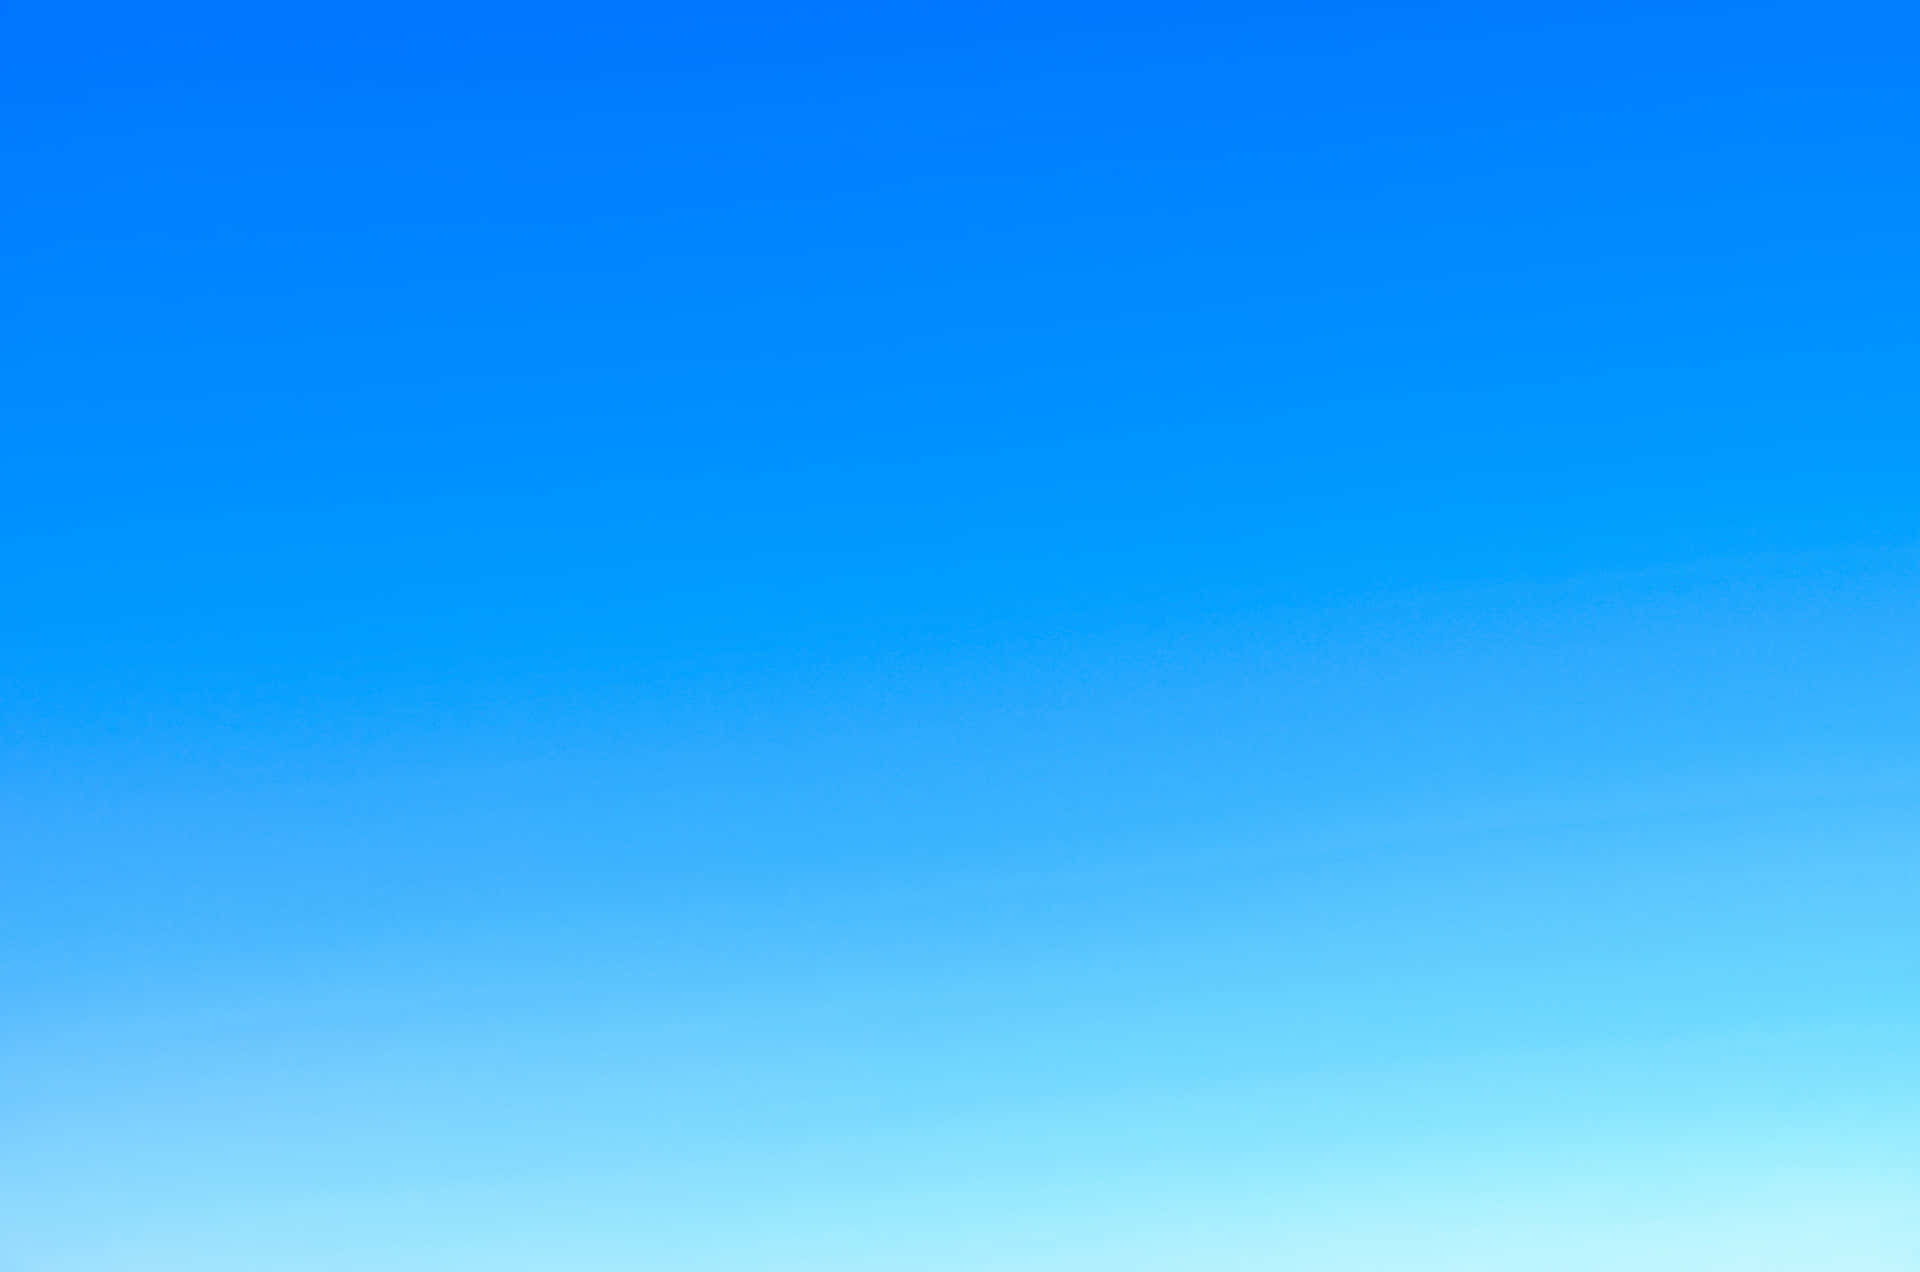 A Blue Sky